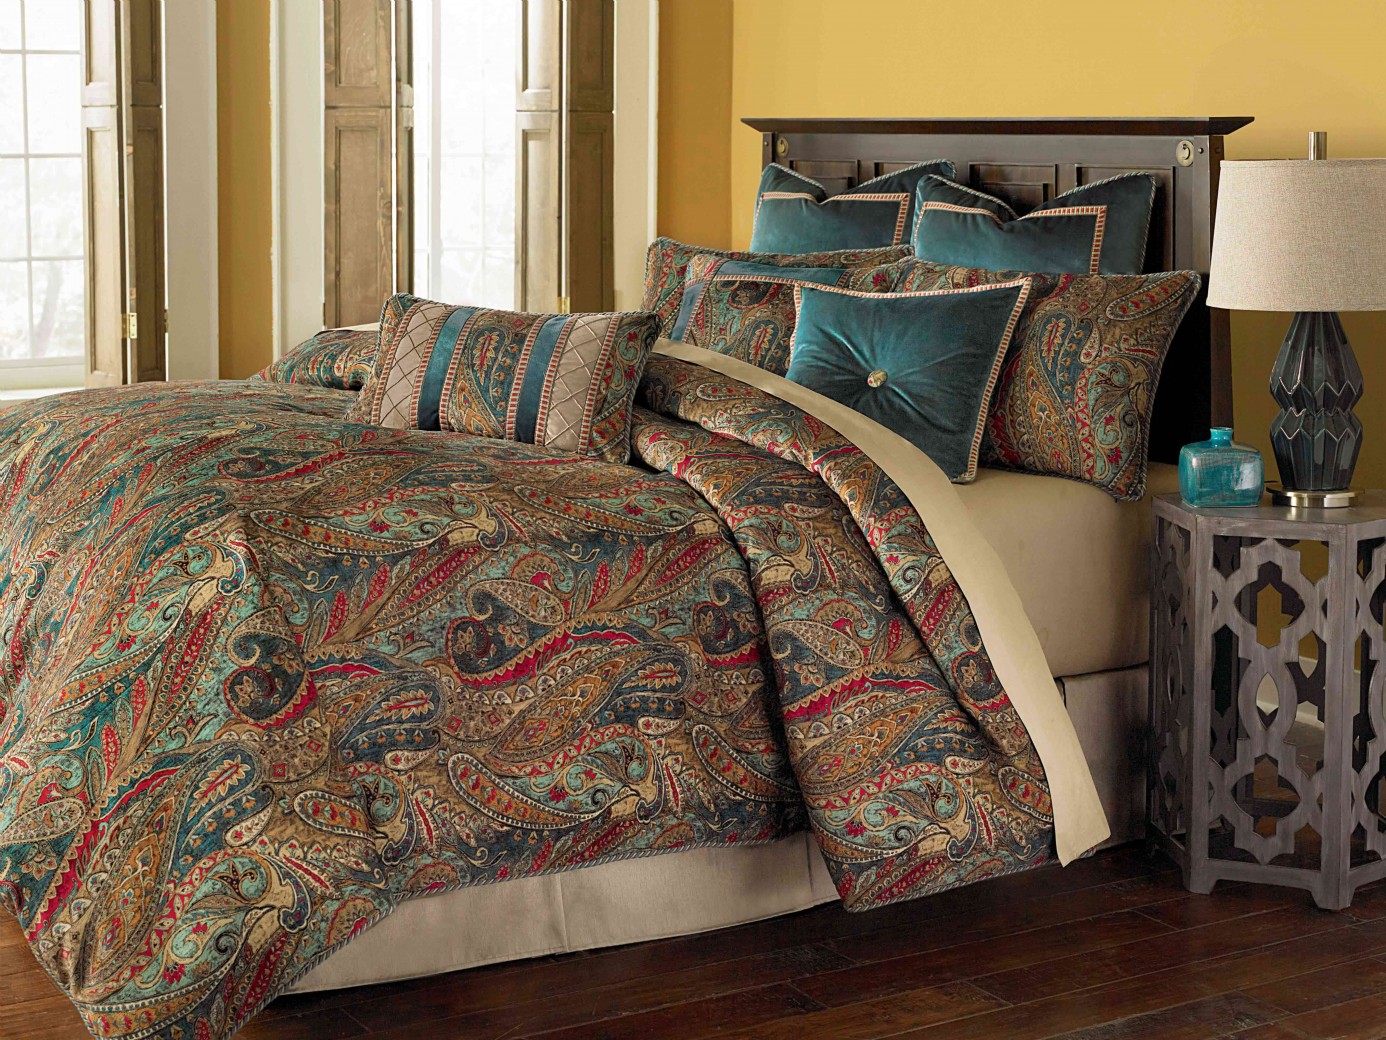 Michael Amini Seville Comforter Bedding Set by Aico